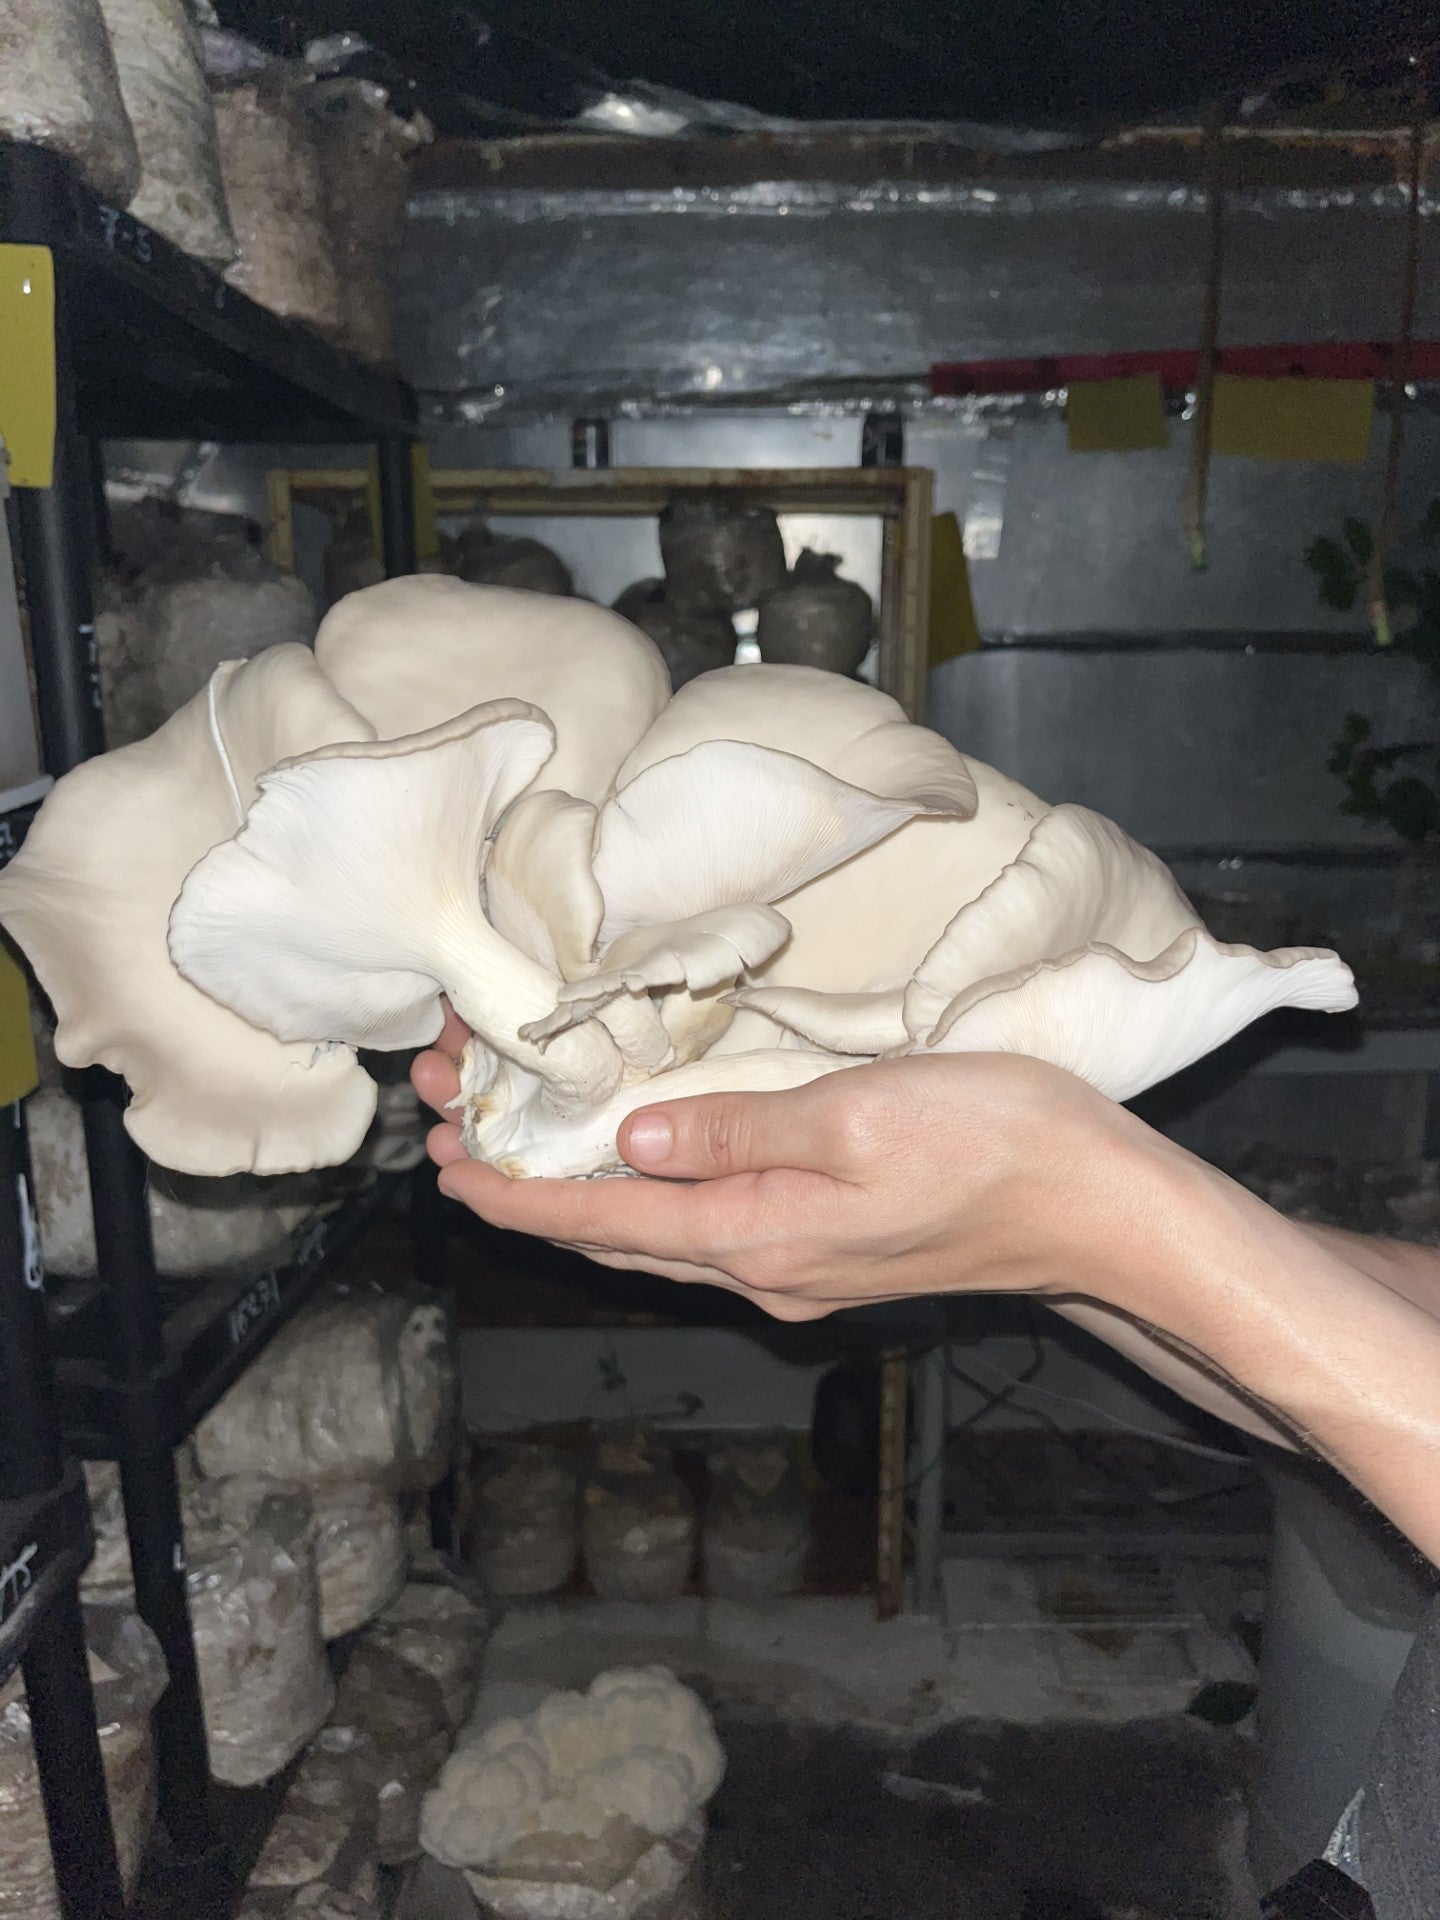 Dry Pleurotus ostreatus - Wild Brown Oyster Mushroom